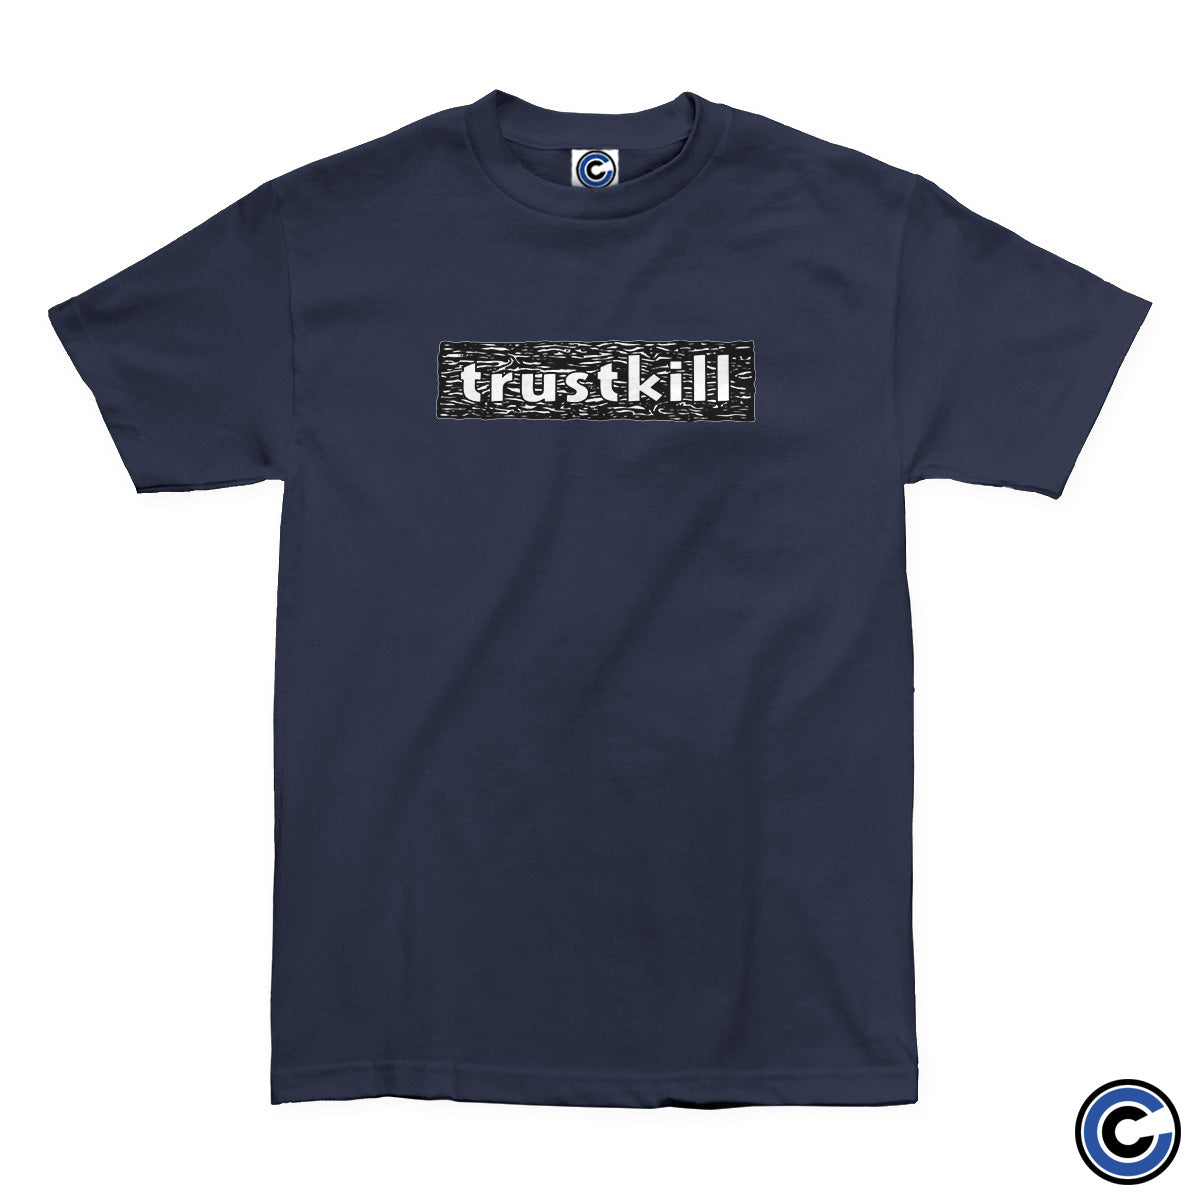 Trustkill Records "Woodcut" Shirt